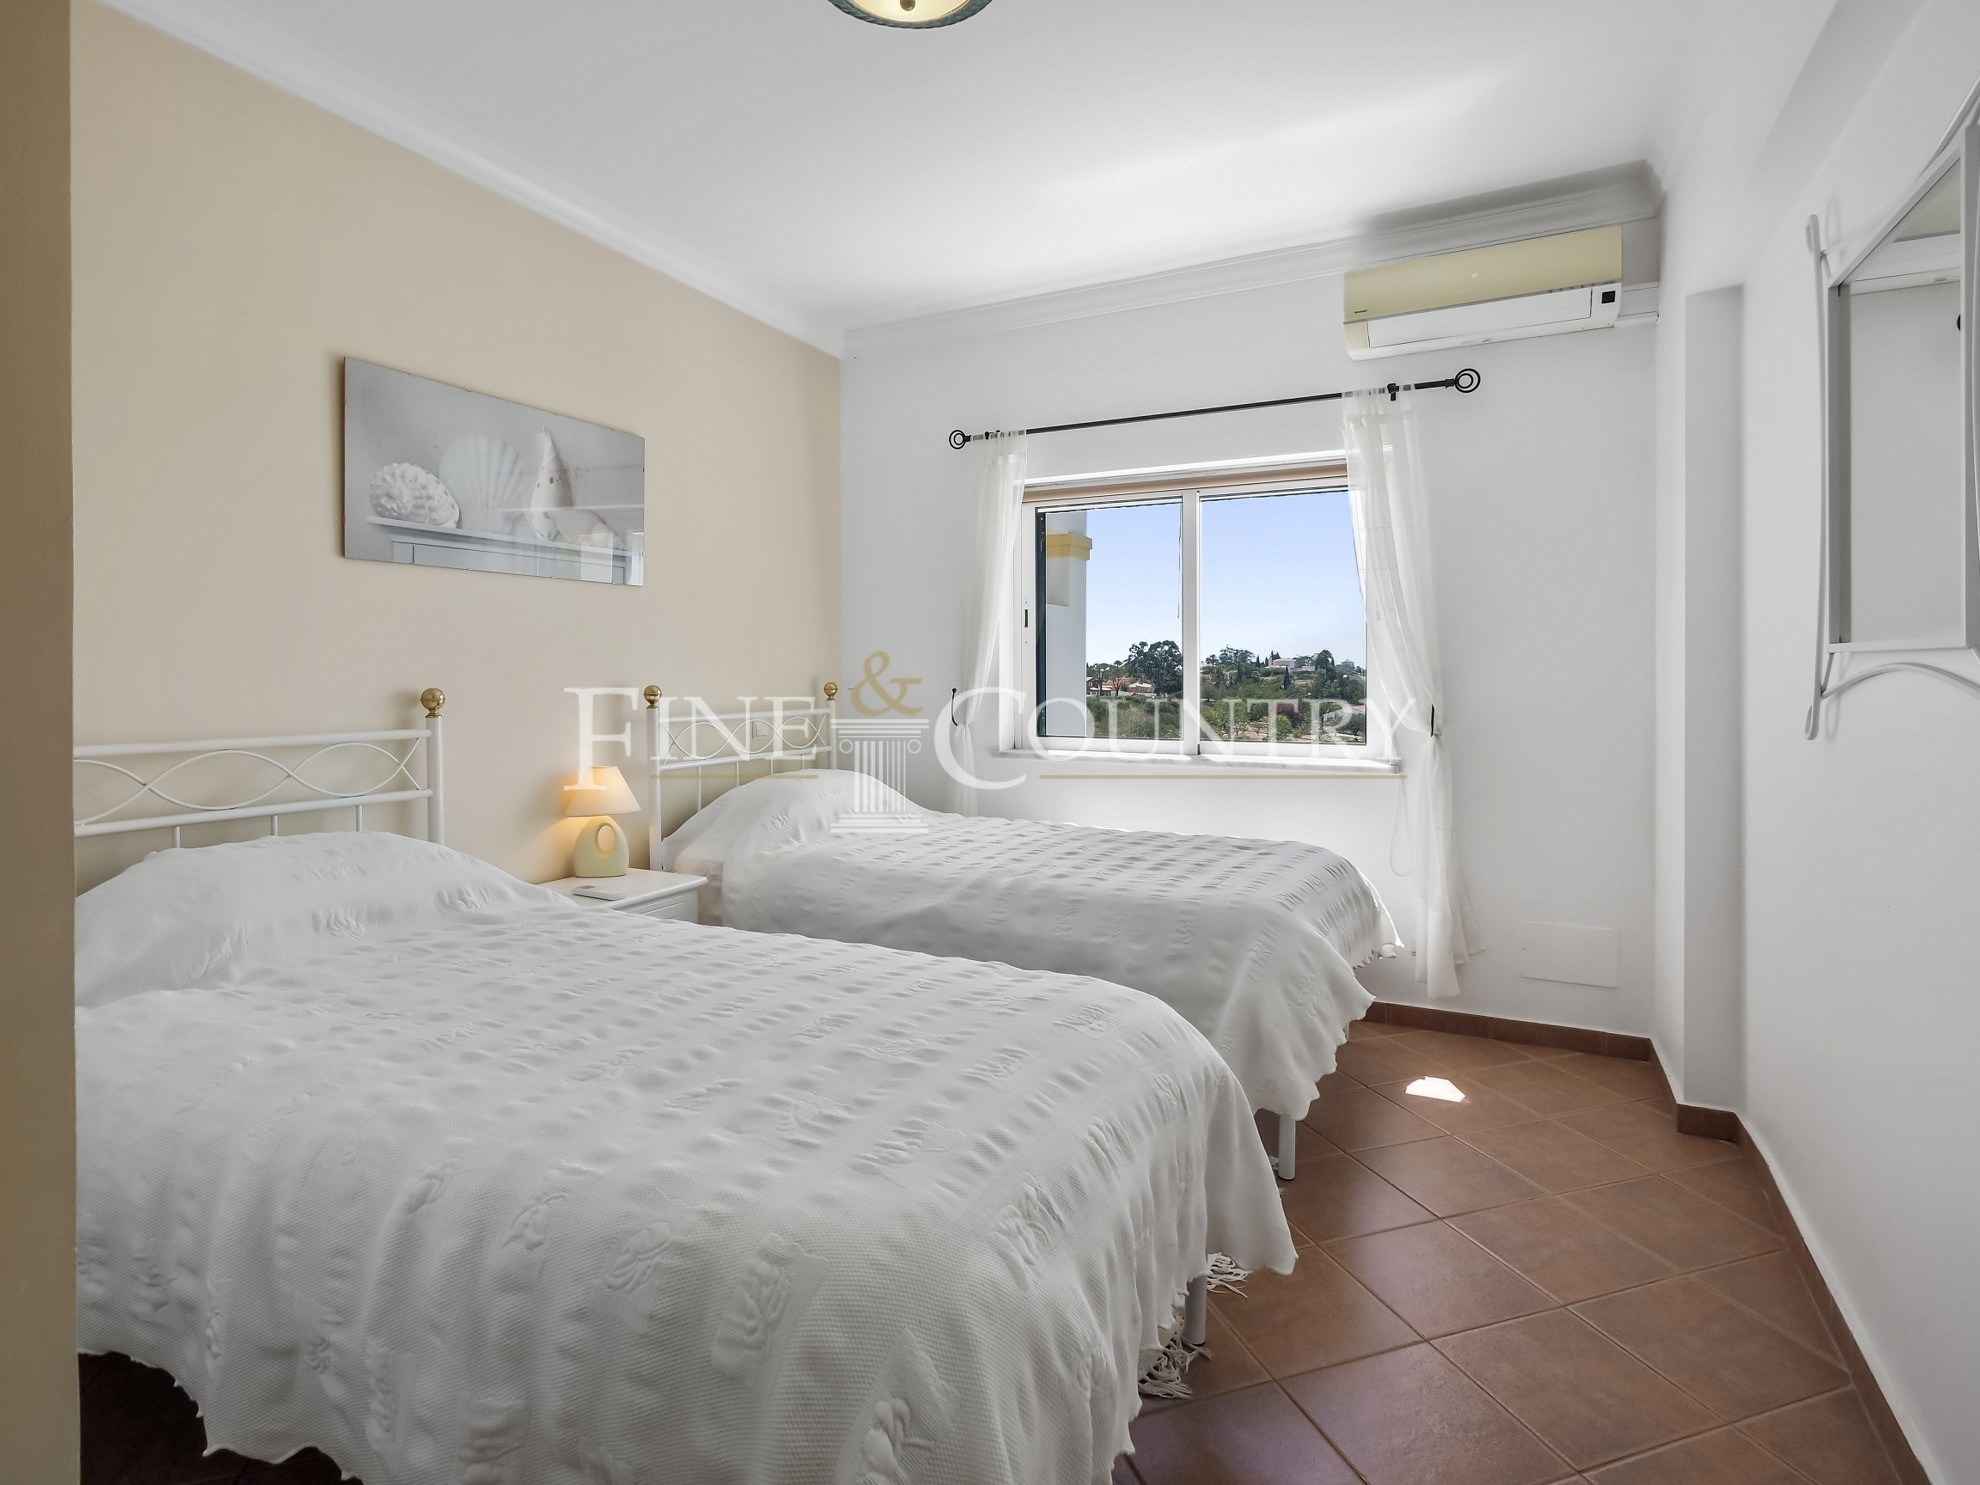 Photo of Carvoeiro - 1+1 bedroom top floor apartment close to Carvoeiro